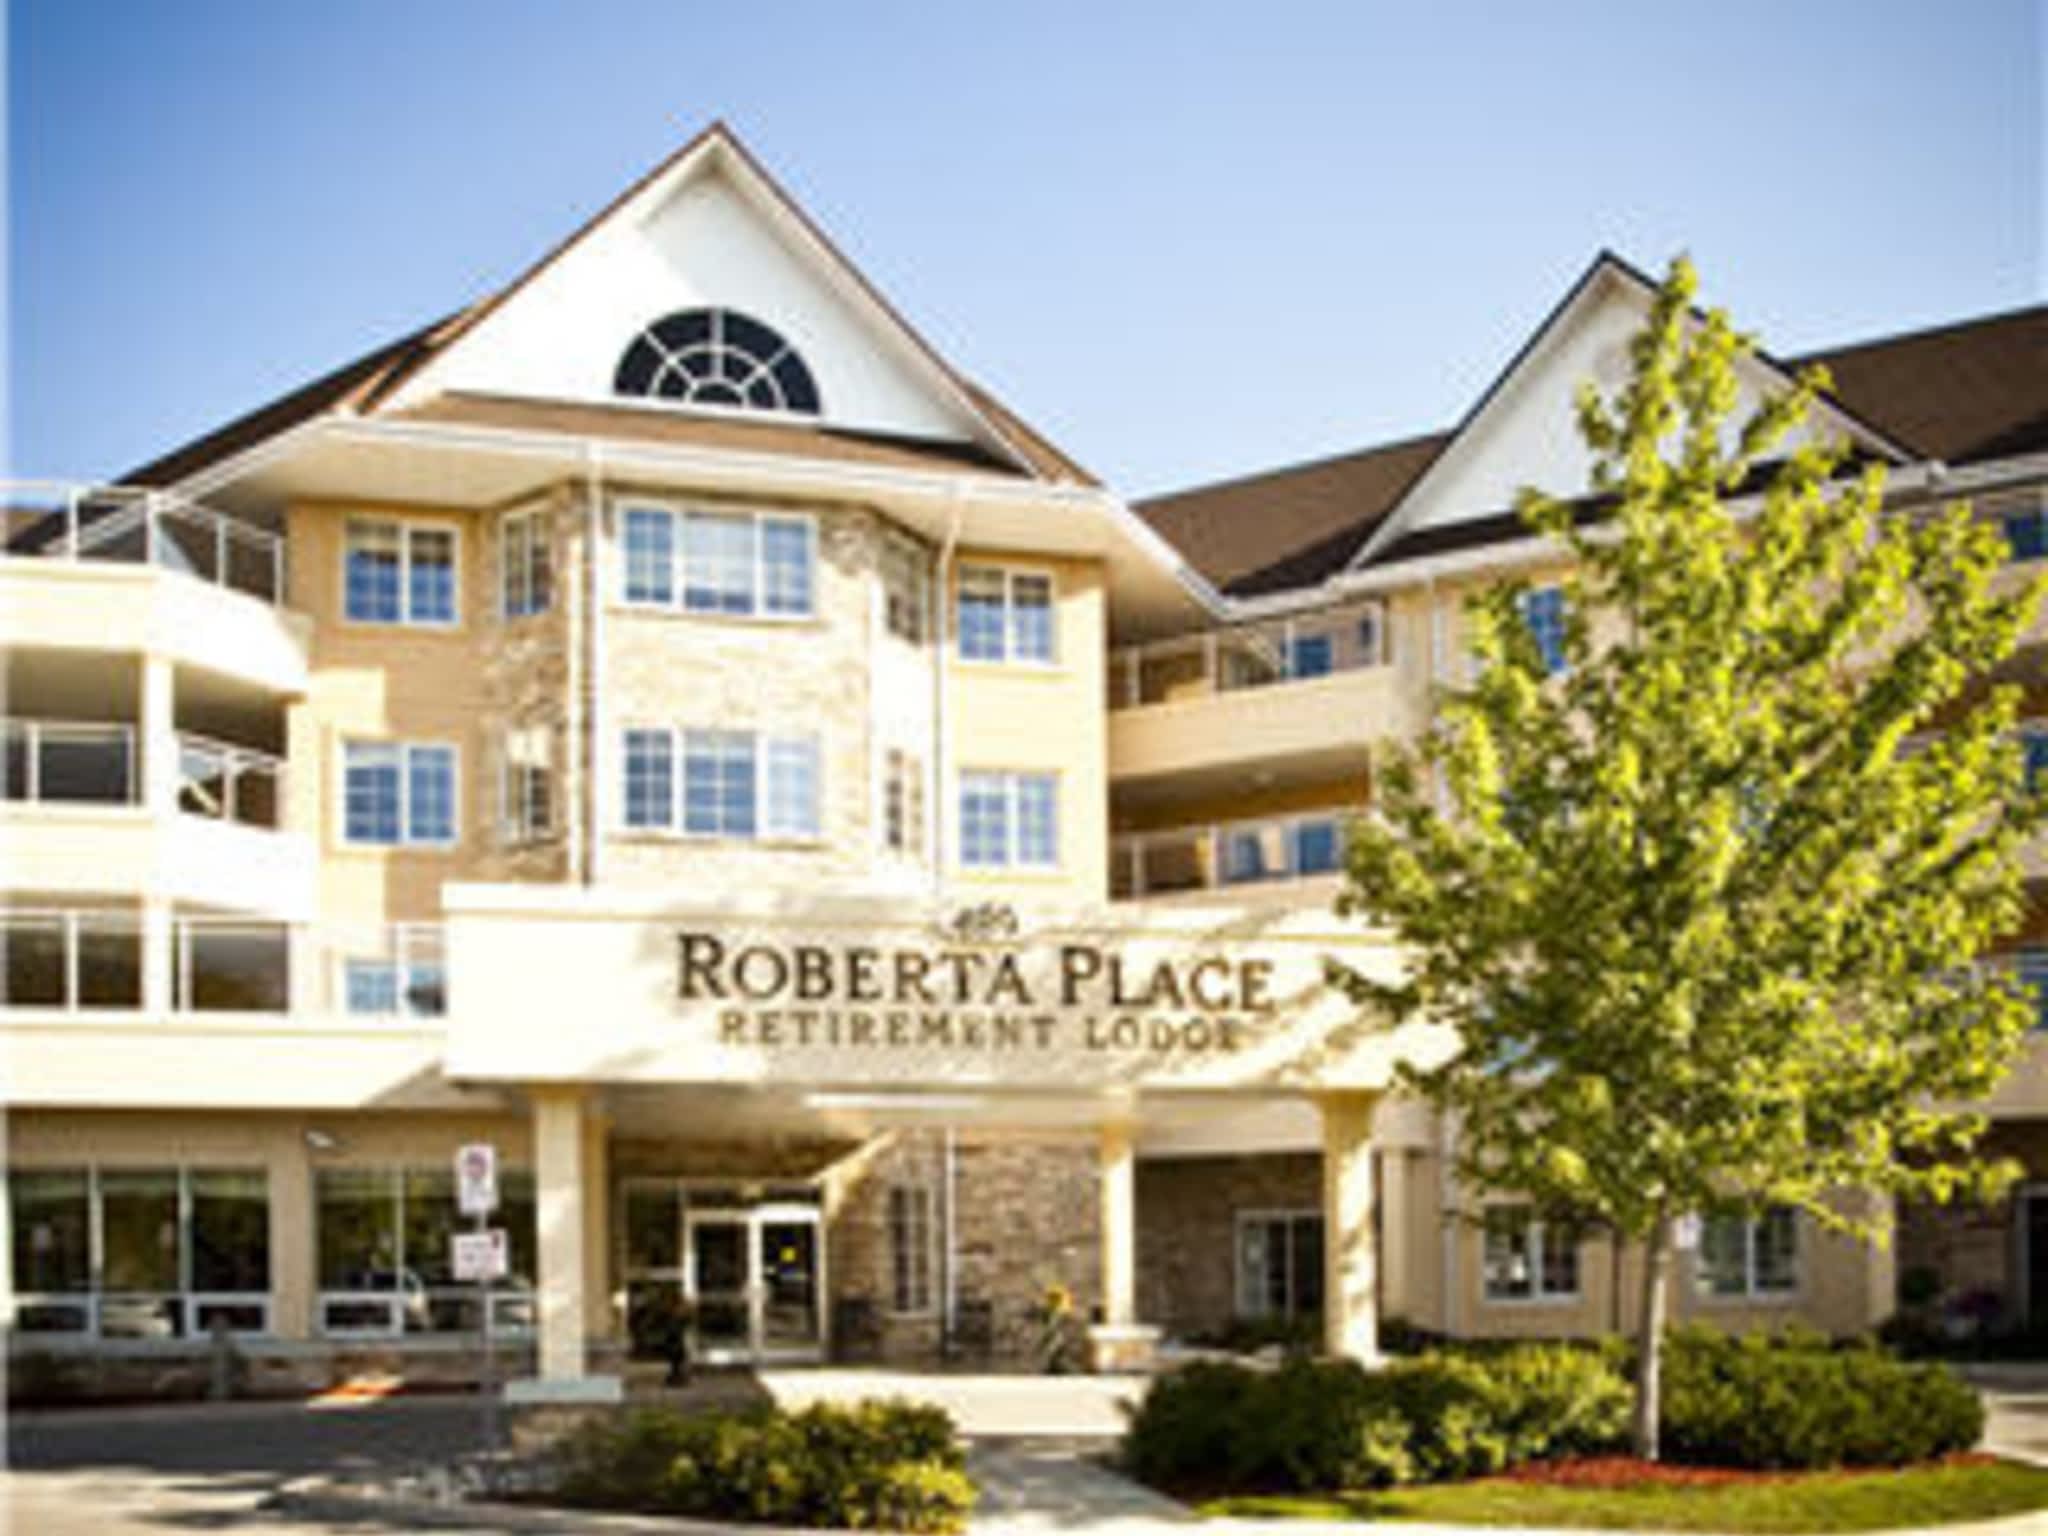 photo Roberta Place Retirement Lodge